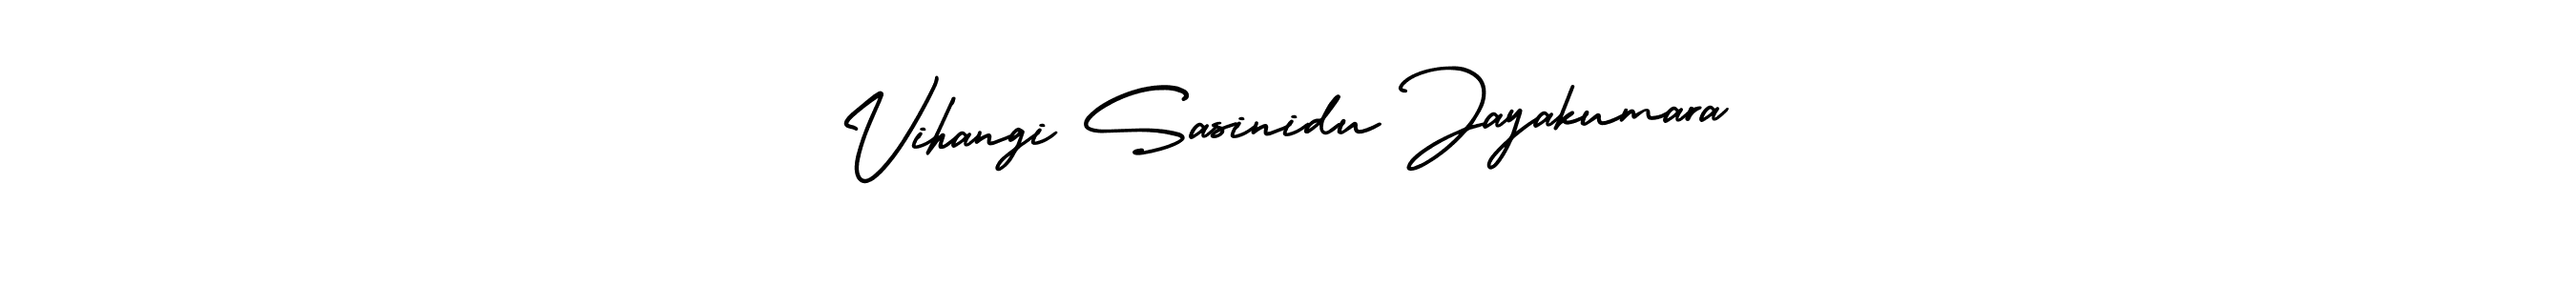 Make a beautiful signature design for name Vihangi Sasinidu Jayakumara. Use this online signature maker to create a handwritten signature for free. Vihangi Sasinidu Jayakumara signature style 3 images and pictures png